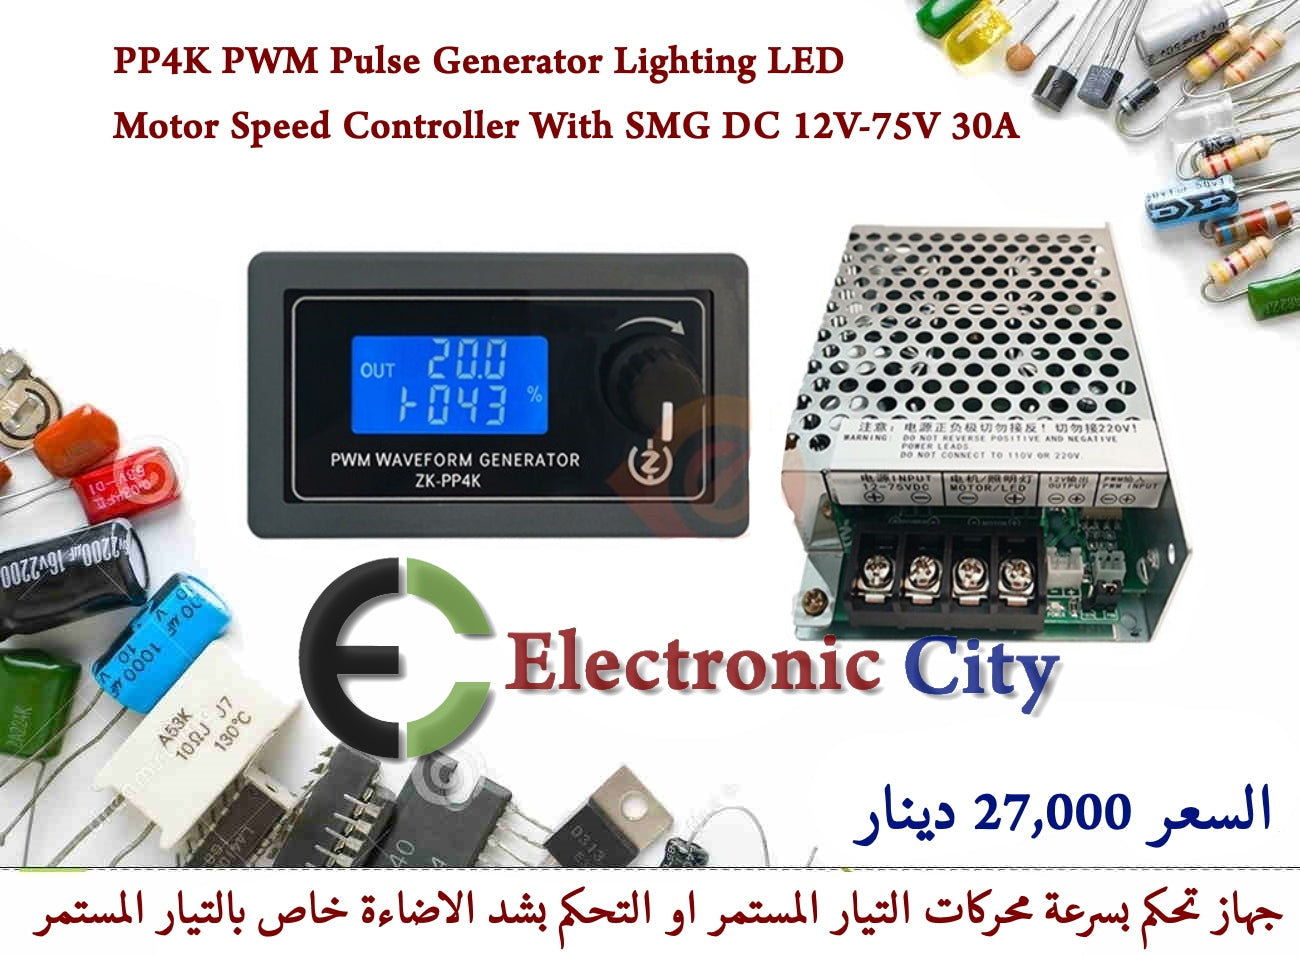 PP4K PWM Pulse Generator Lighting LED Motor Speed Controller With SMG DC 12V-75V 30A